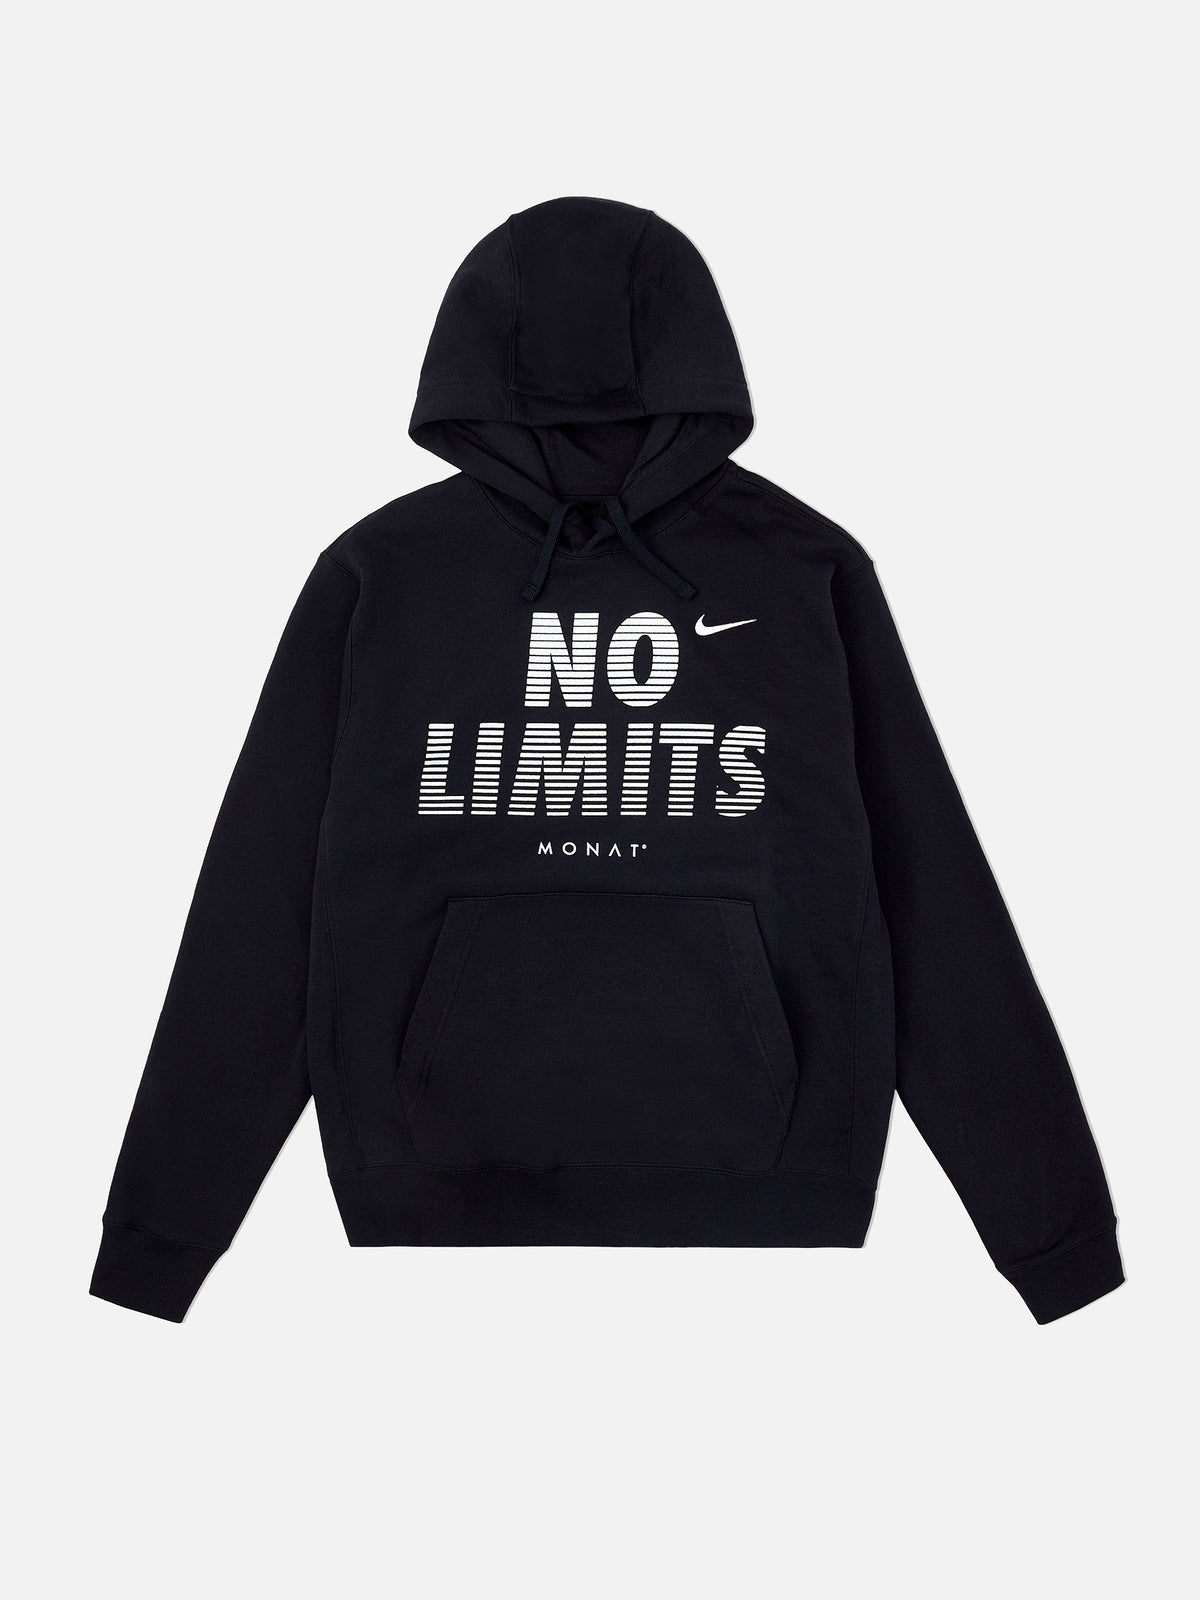 MONAT x Nike No Limits Hoodie